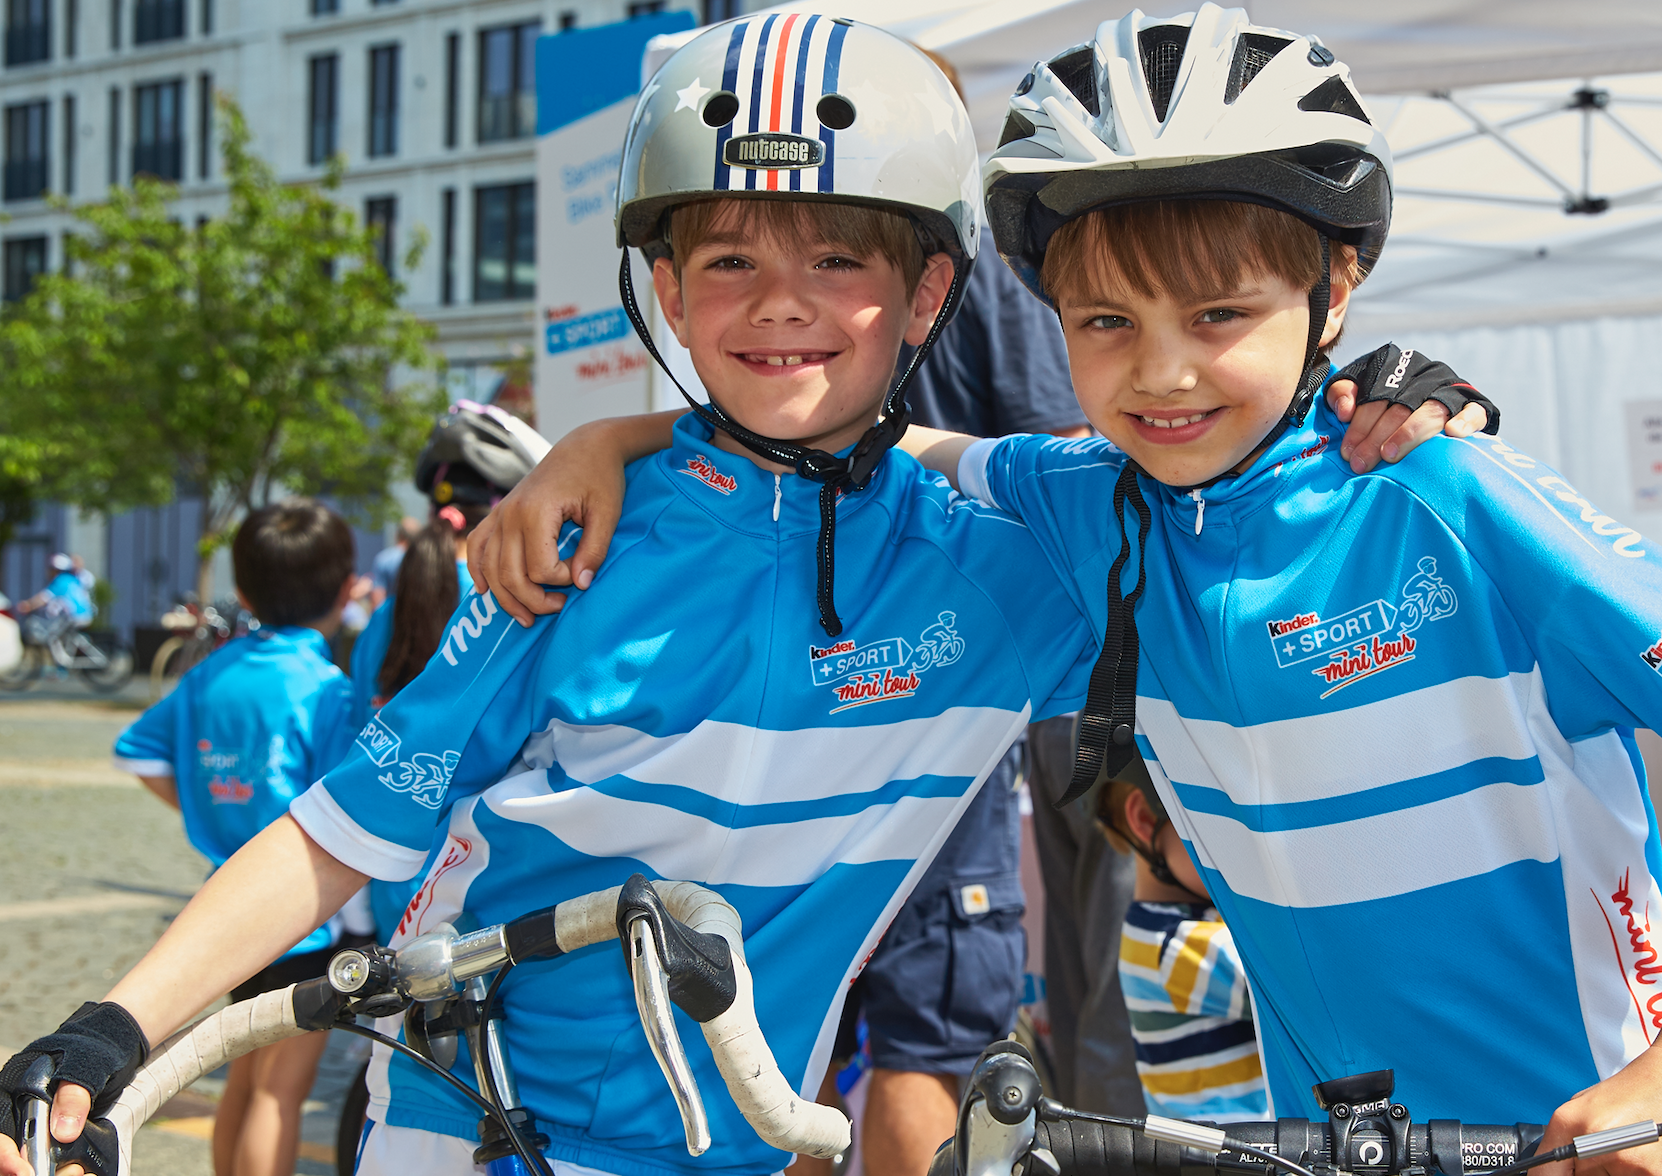 kinder+Sport mini tour“ verschenkt 300 Kinder-Fahrrad-Outfits